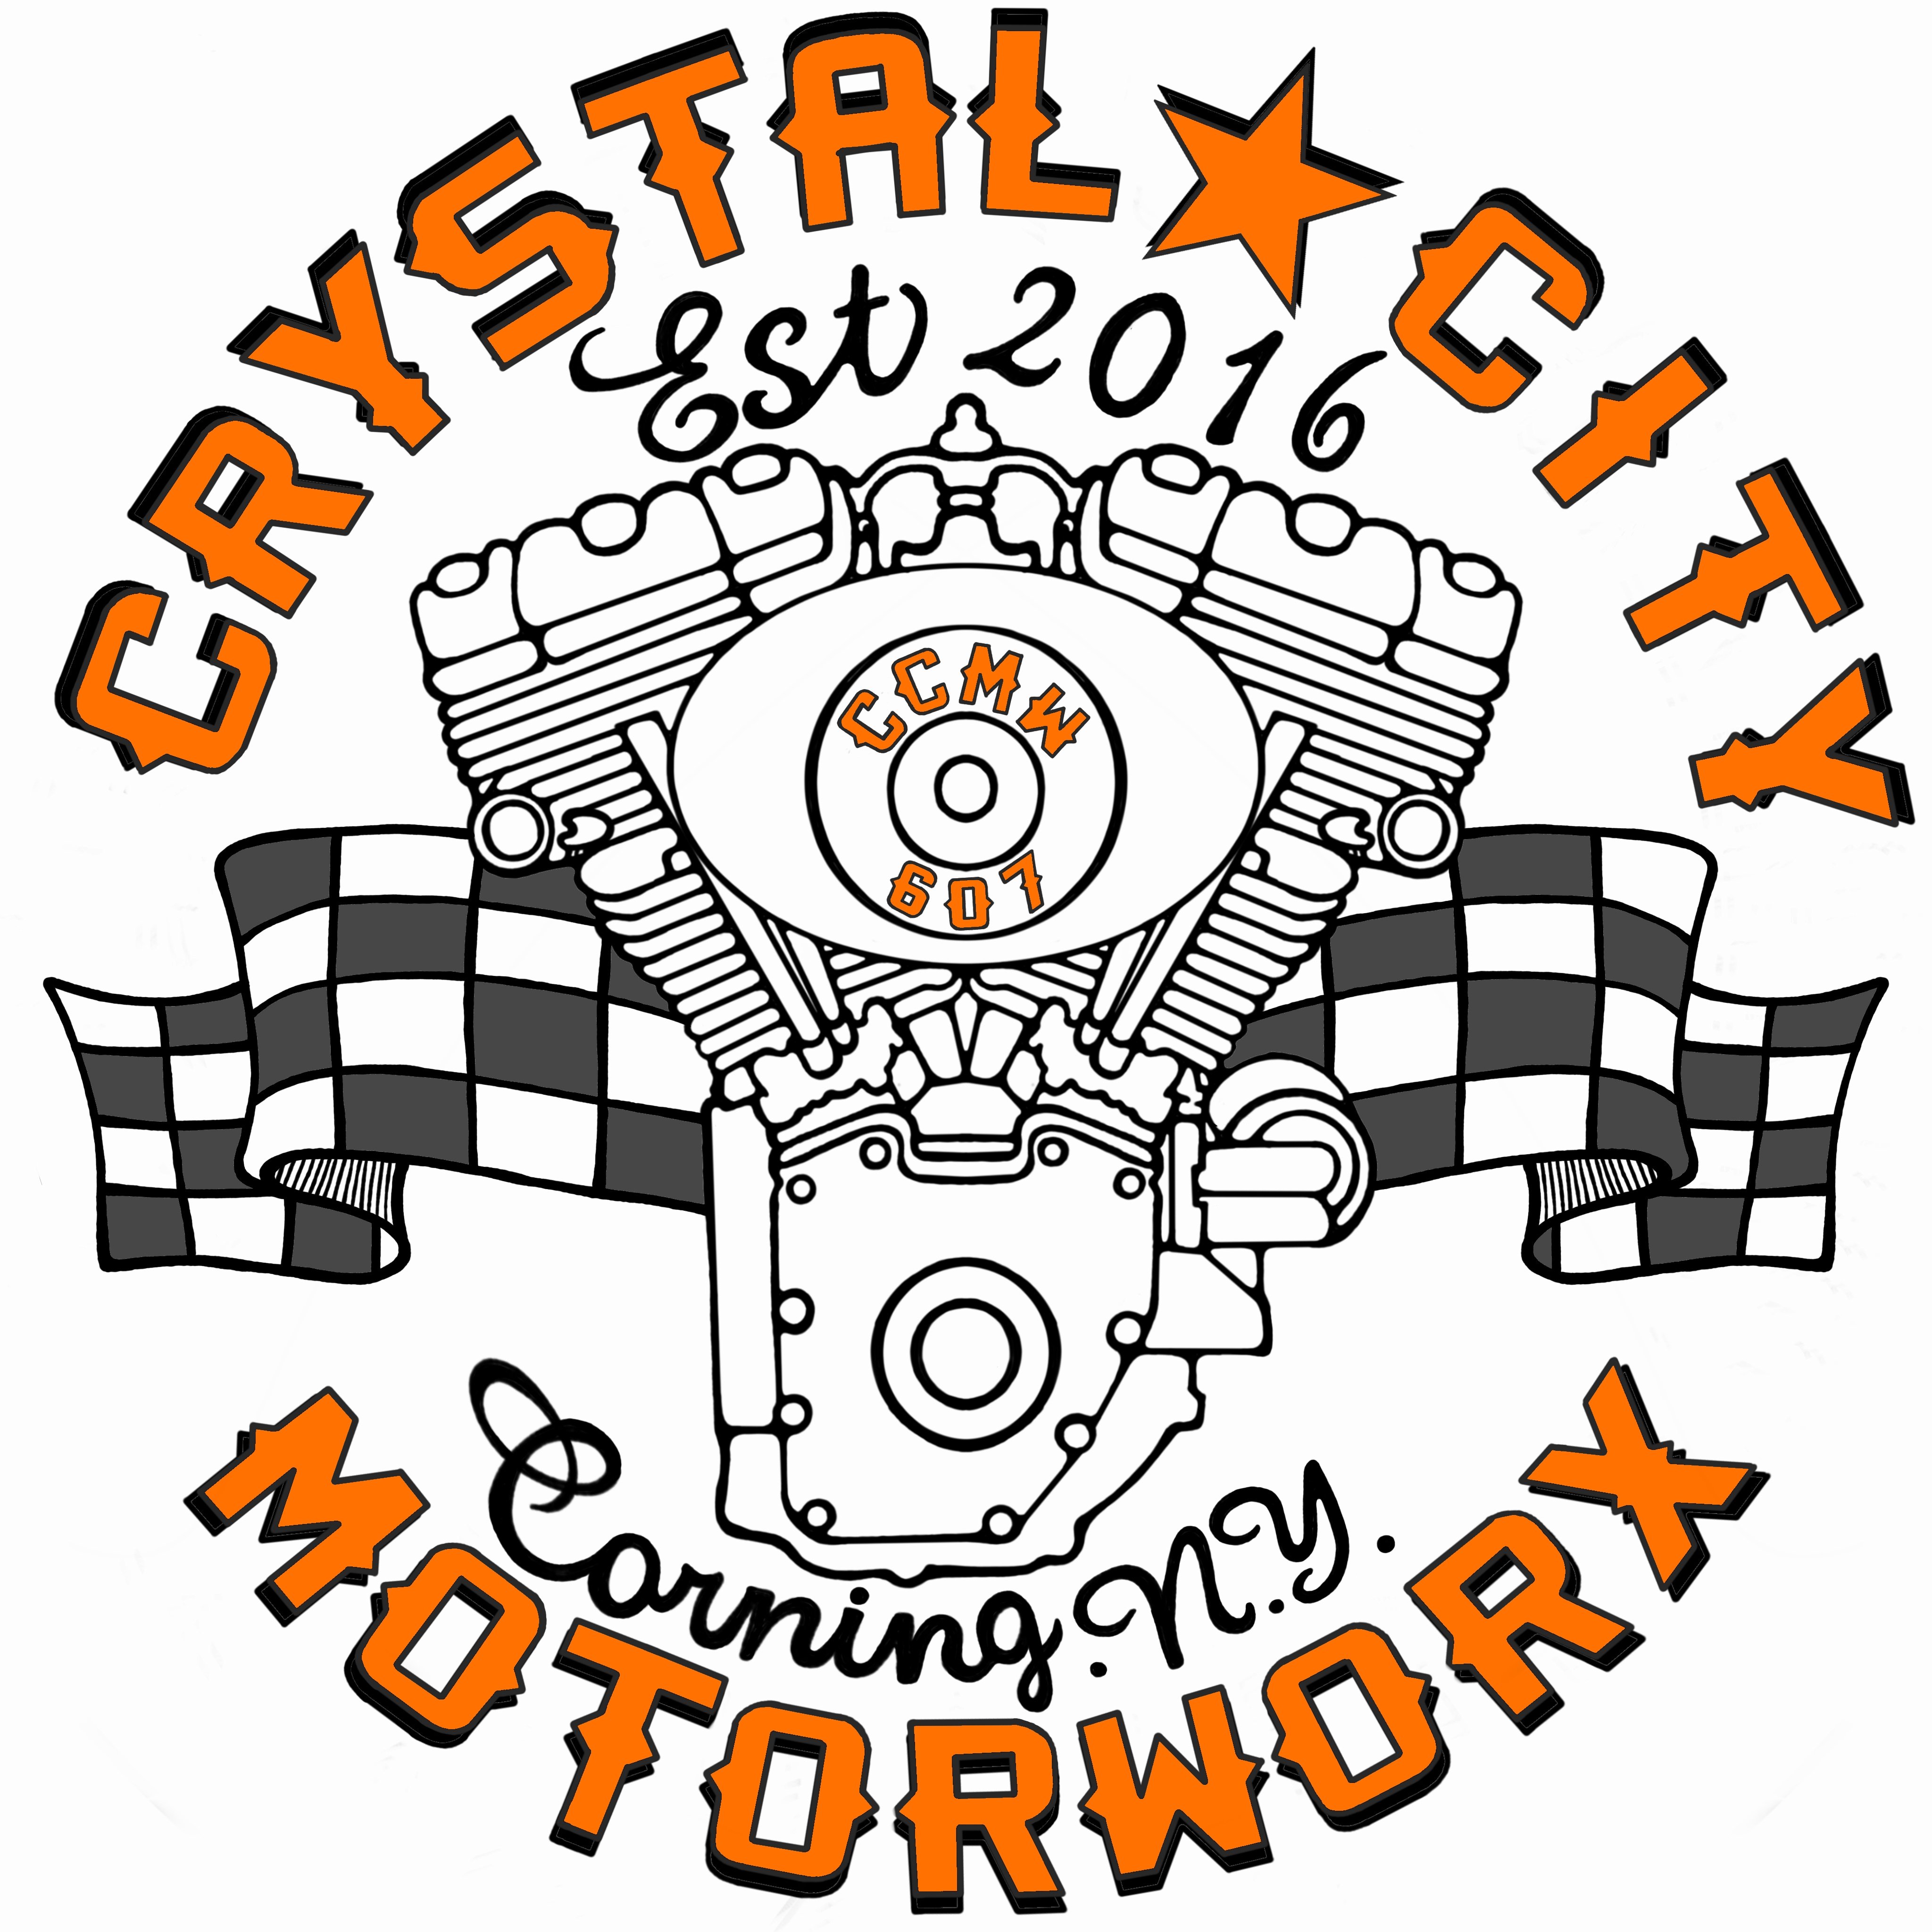 CRYSYAL CITY MOTORWORX